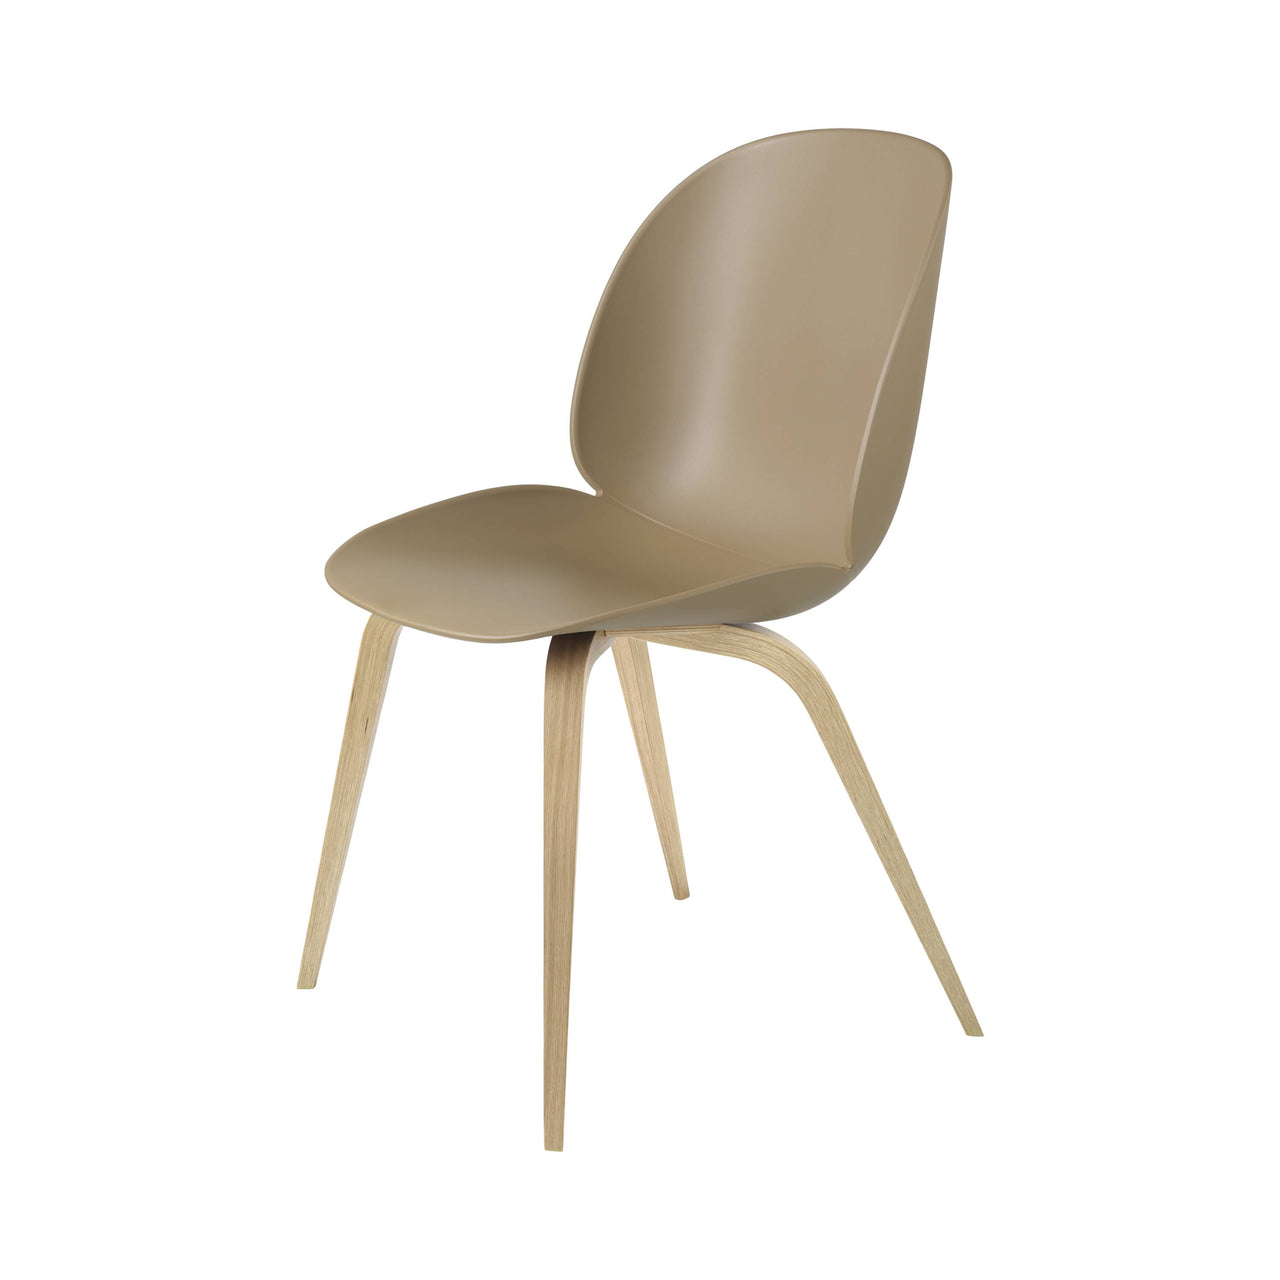 Beetle Dining Chair: Wood Base + Pebble Brown + Oak + Plastic Glides